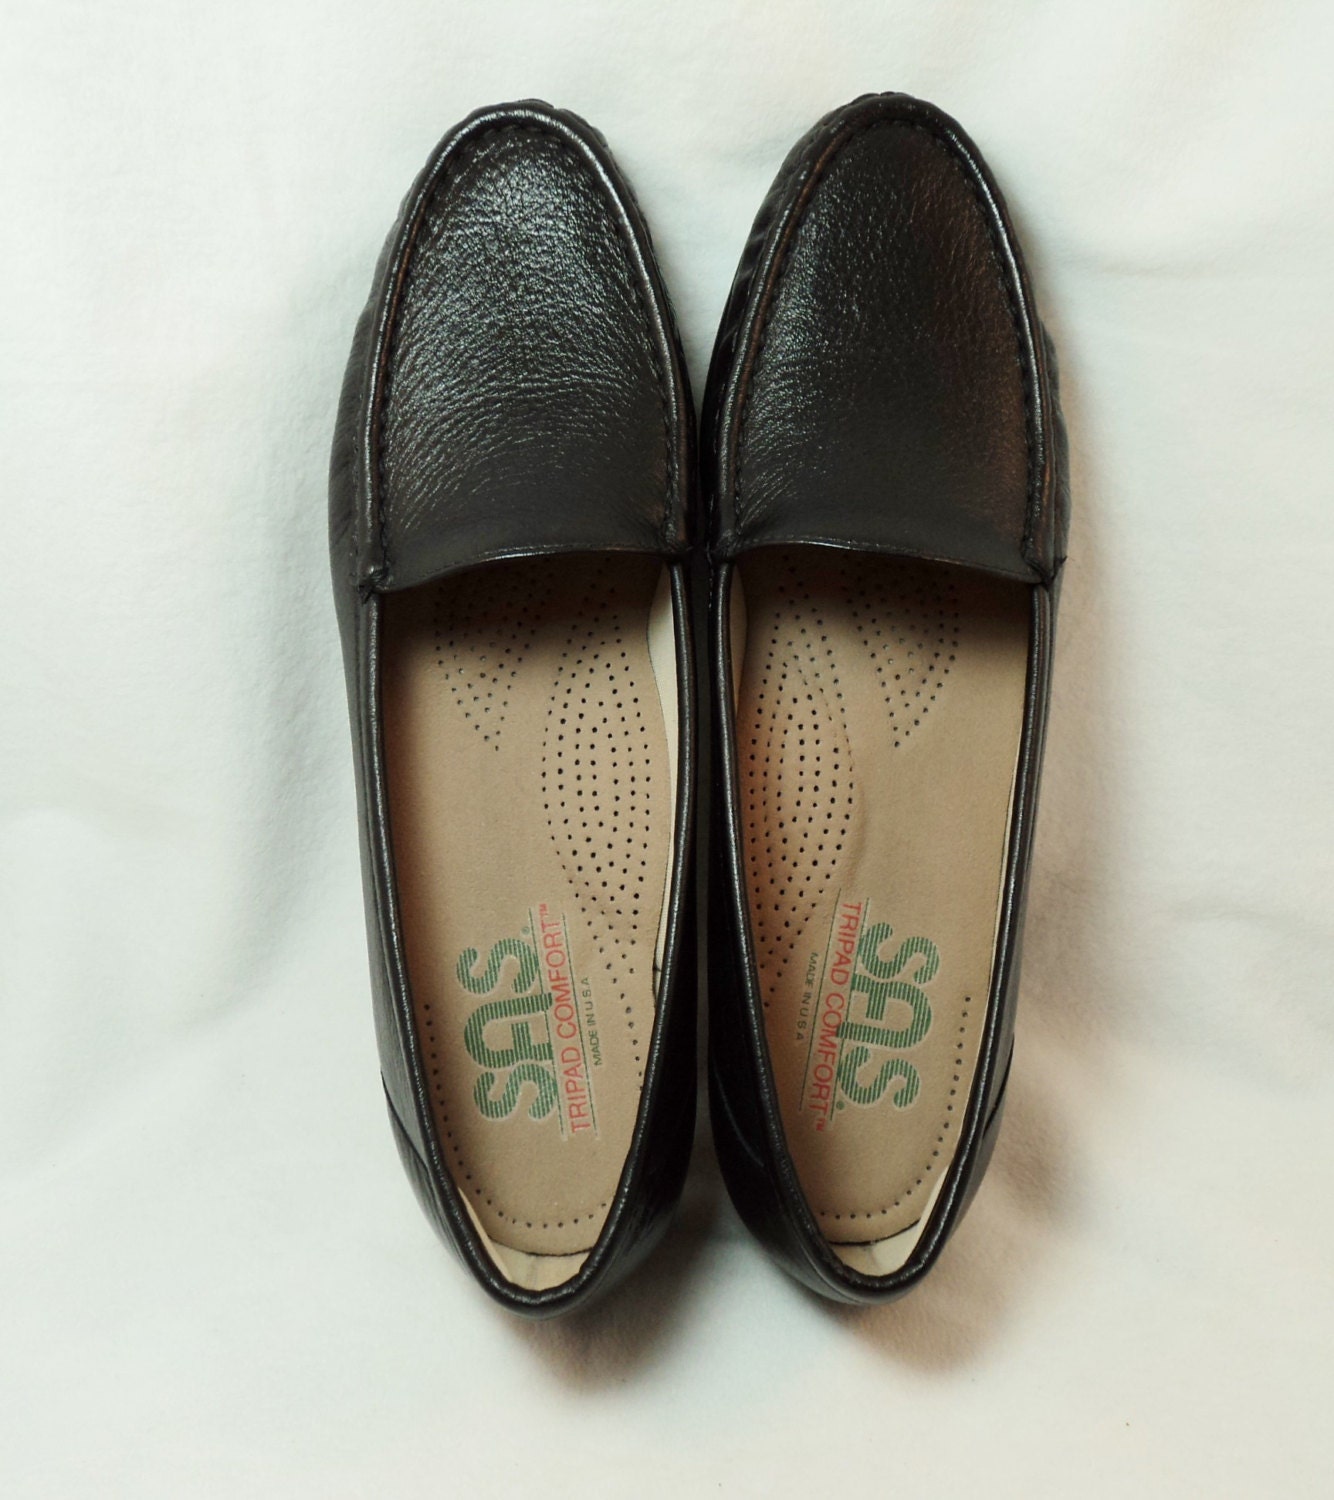 Sas Shoes Size Chart